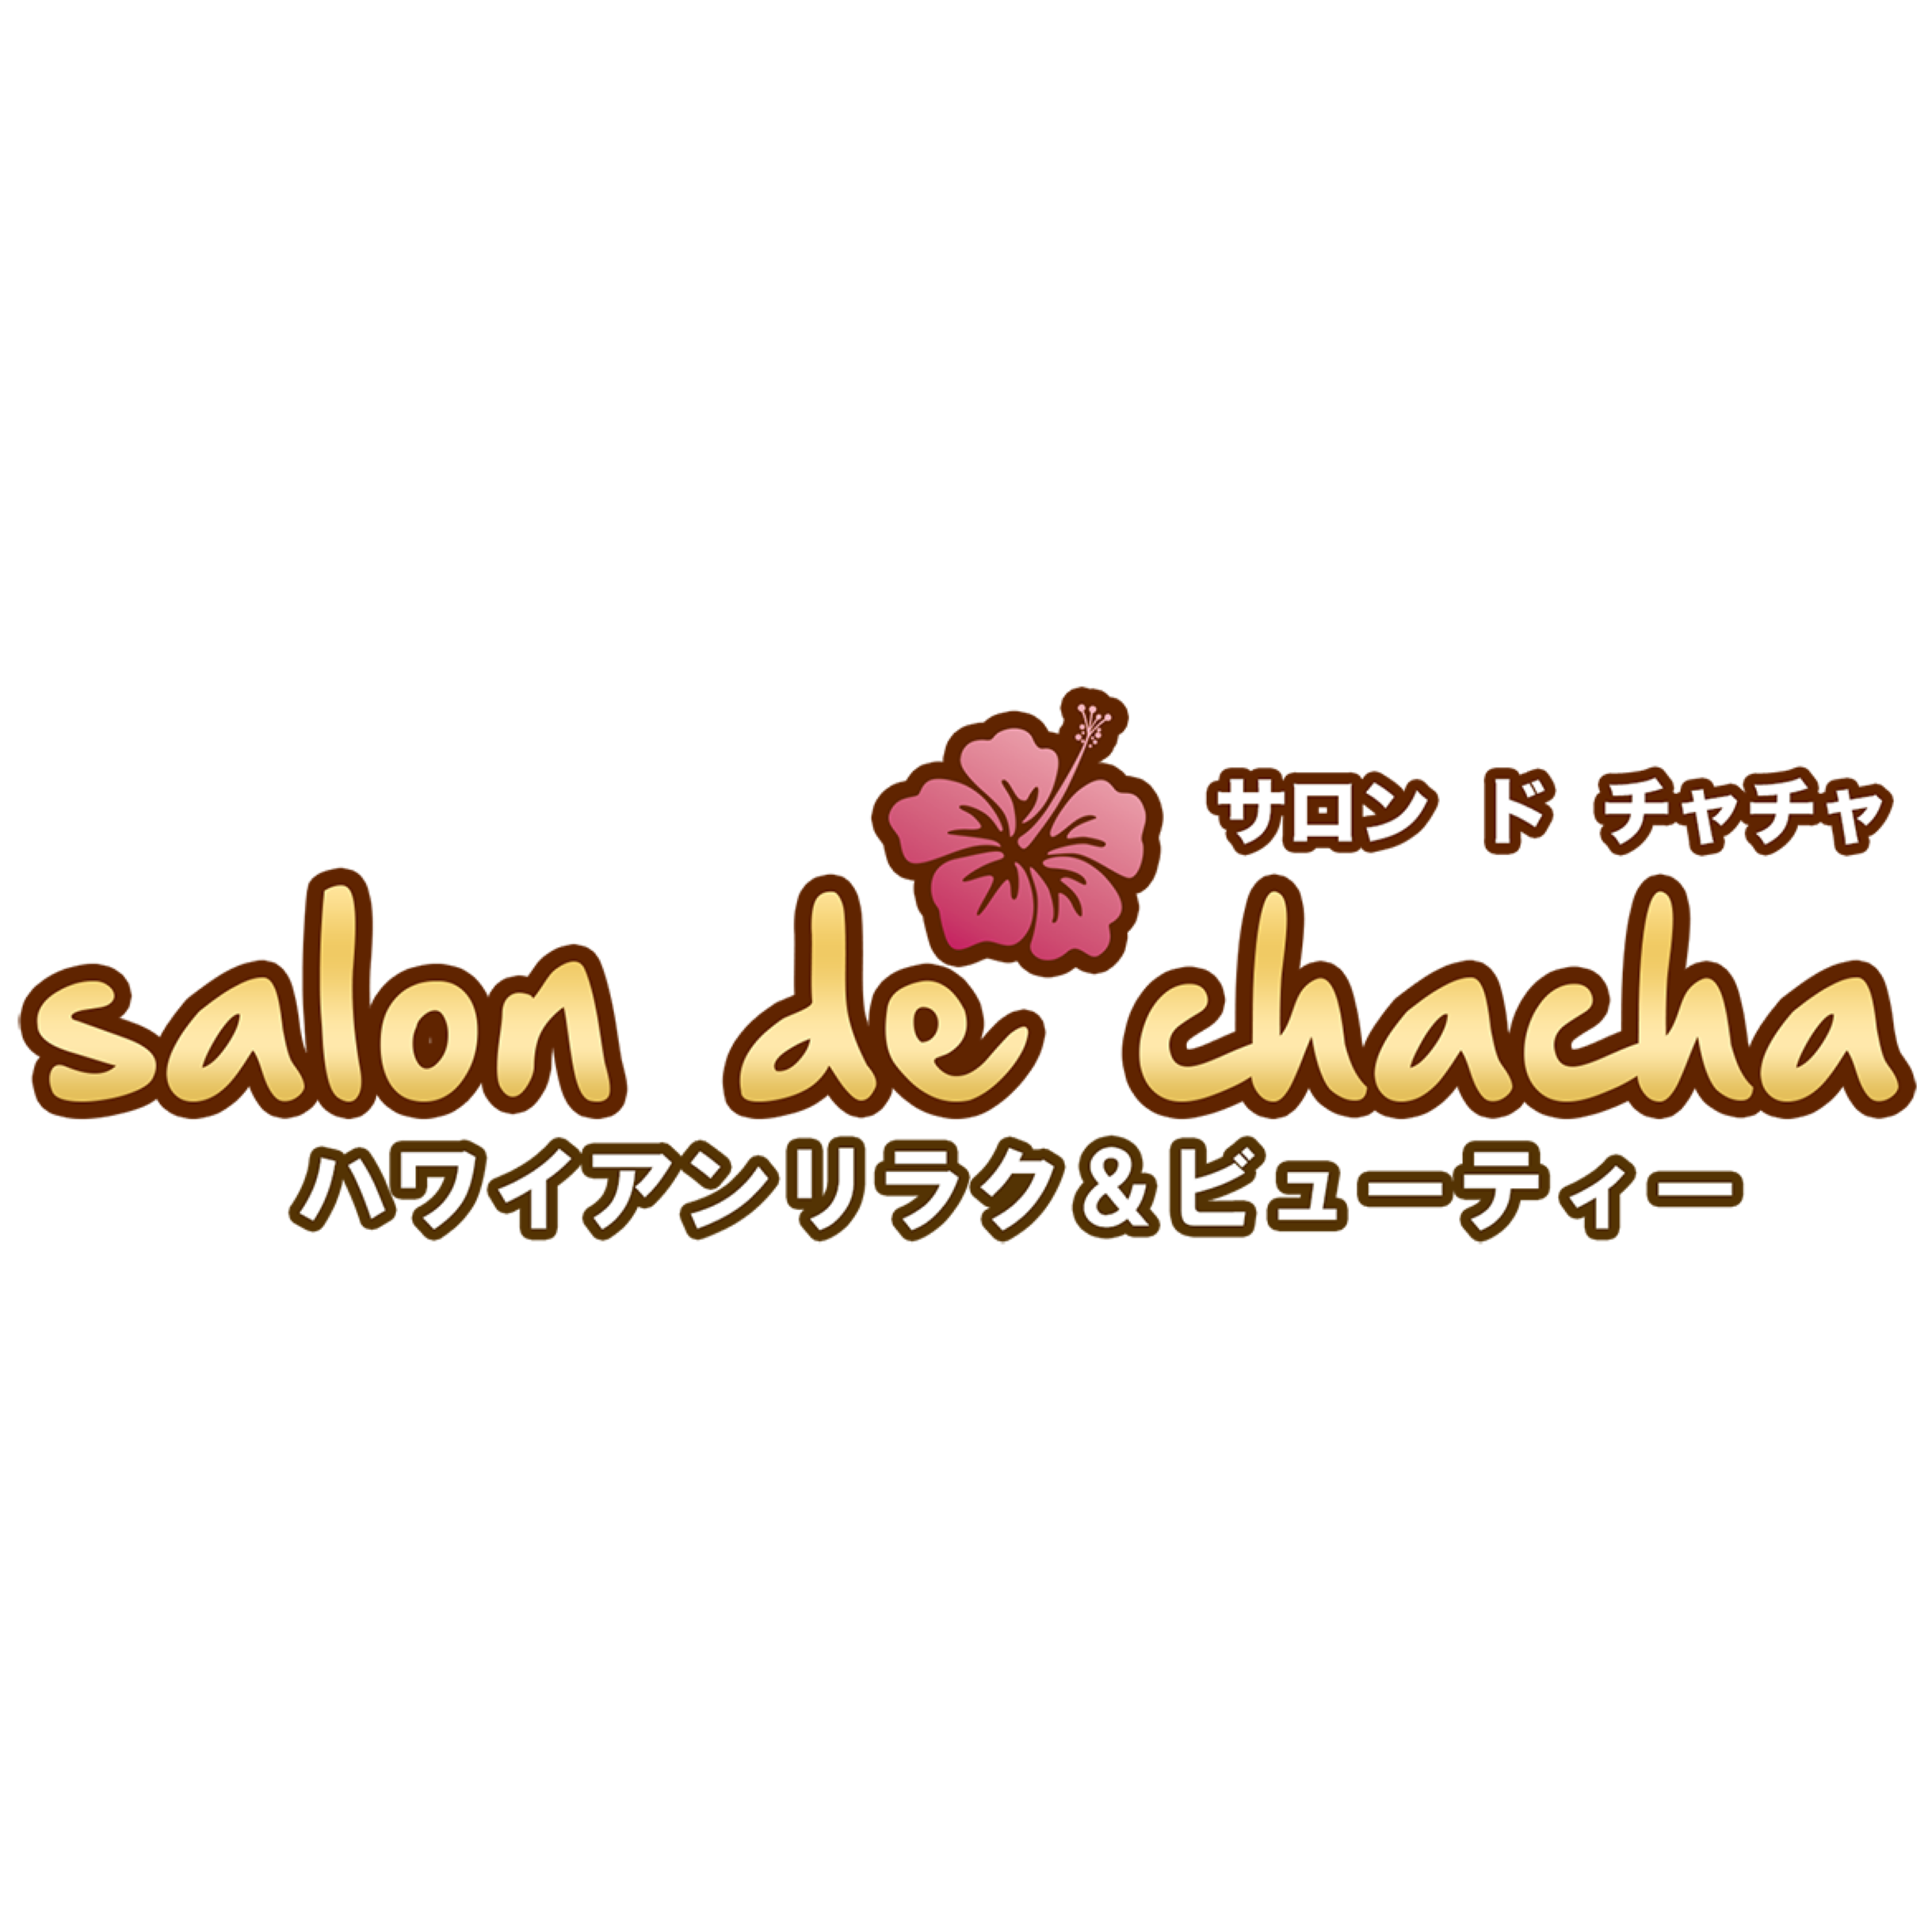 Salon de chacha 渋谷本店〜ハワイアンリラク＆ビューティー〜 - Aromatherapy Service - 渋谷区 - 03-6712-6731 Japan | ShowMeLocal.com